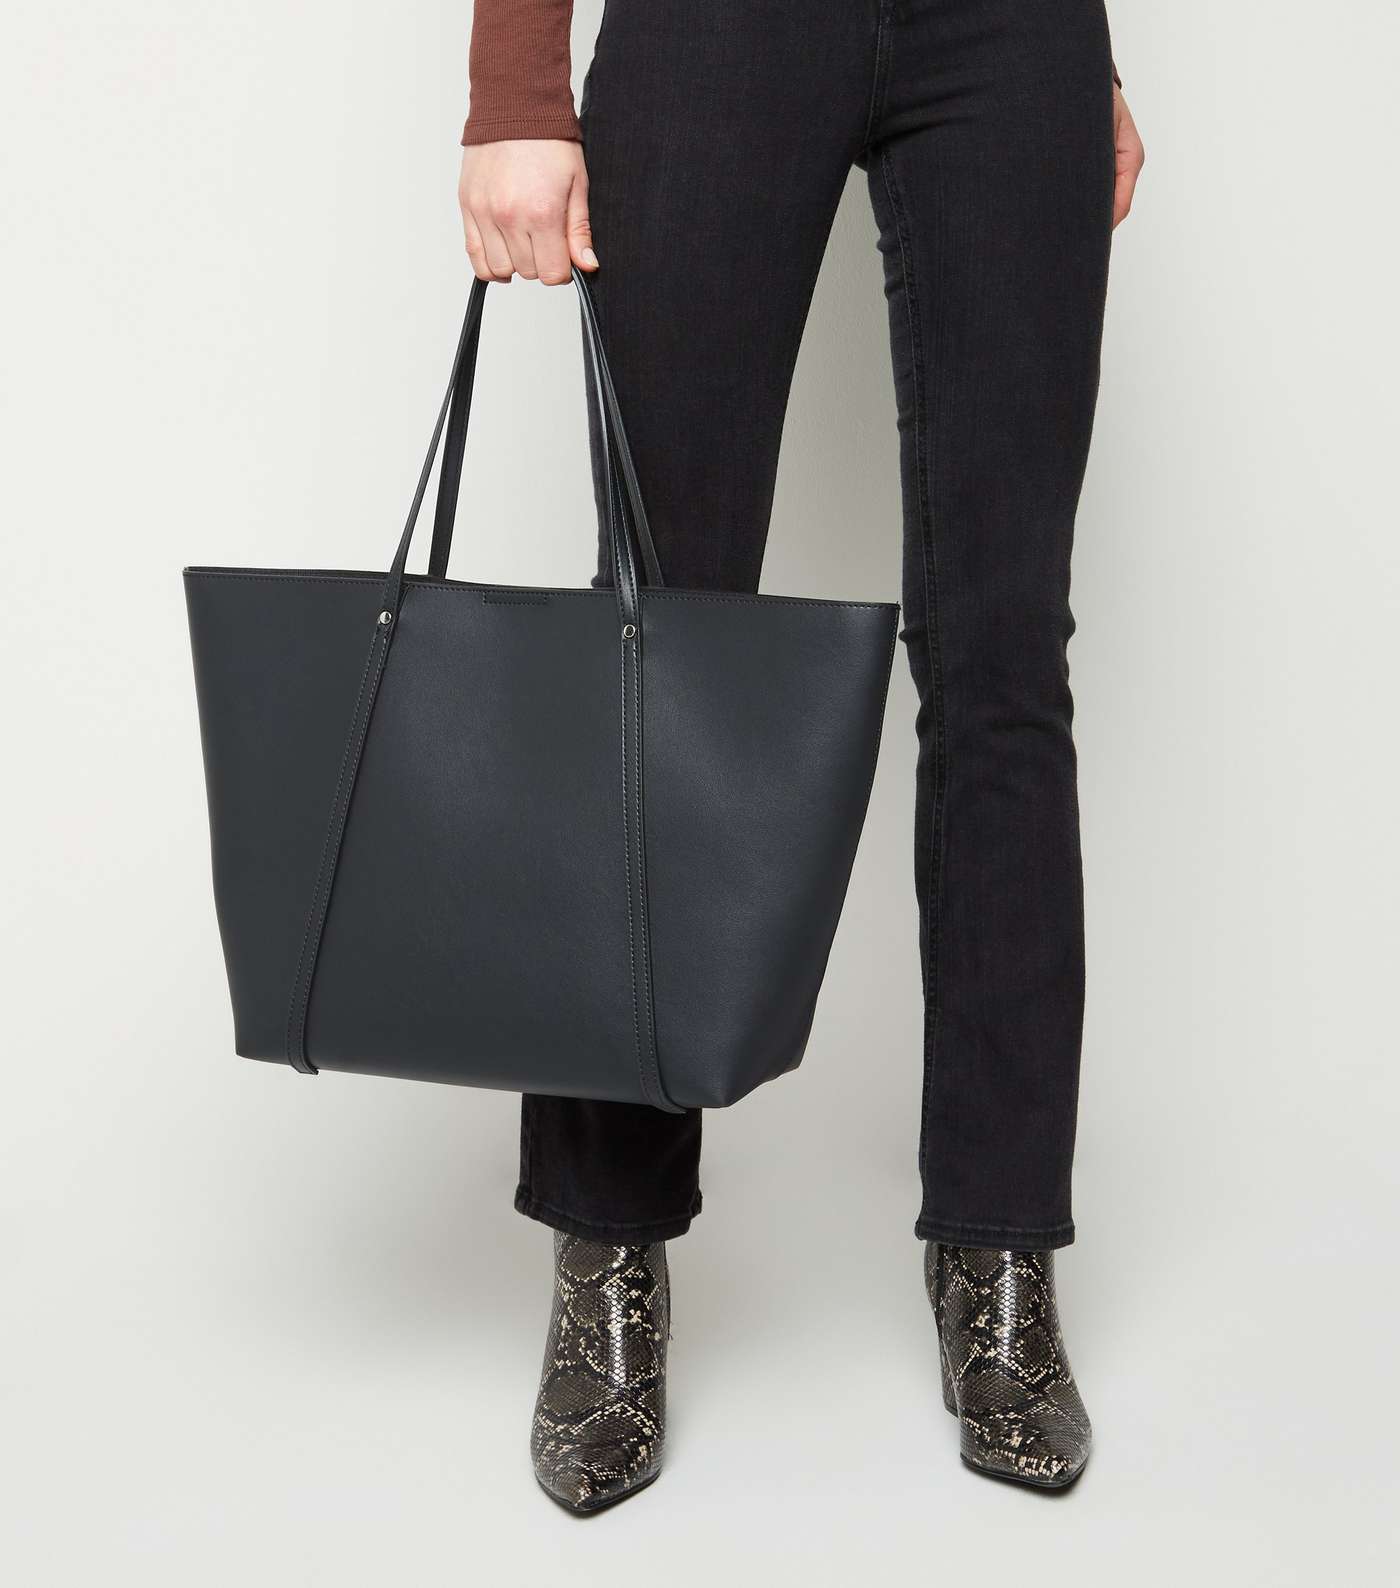 Black Leather-Look Large Tote Bag Image 3